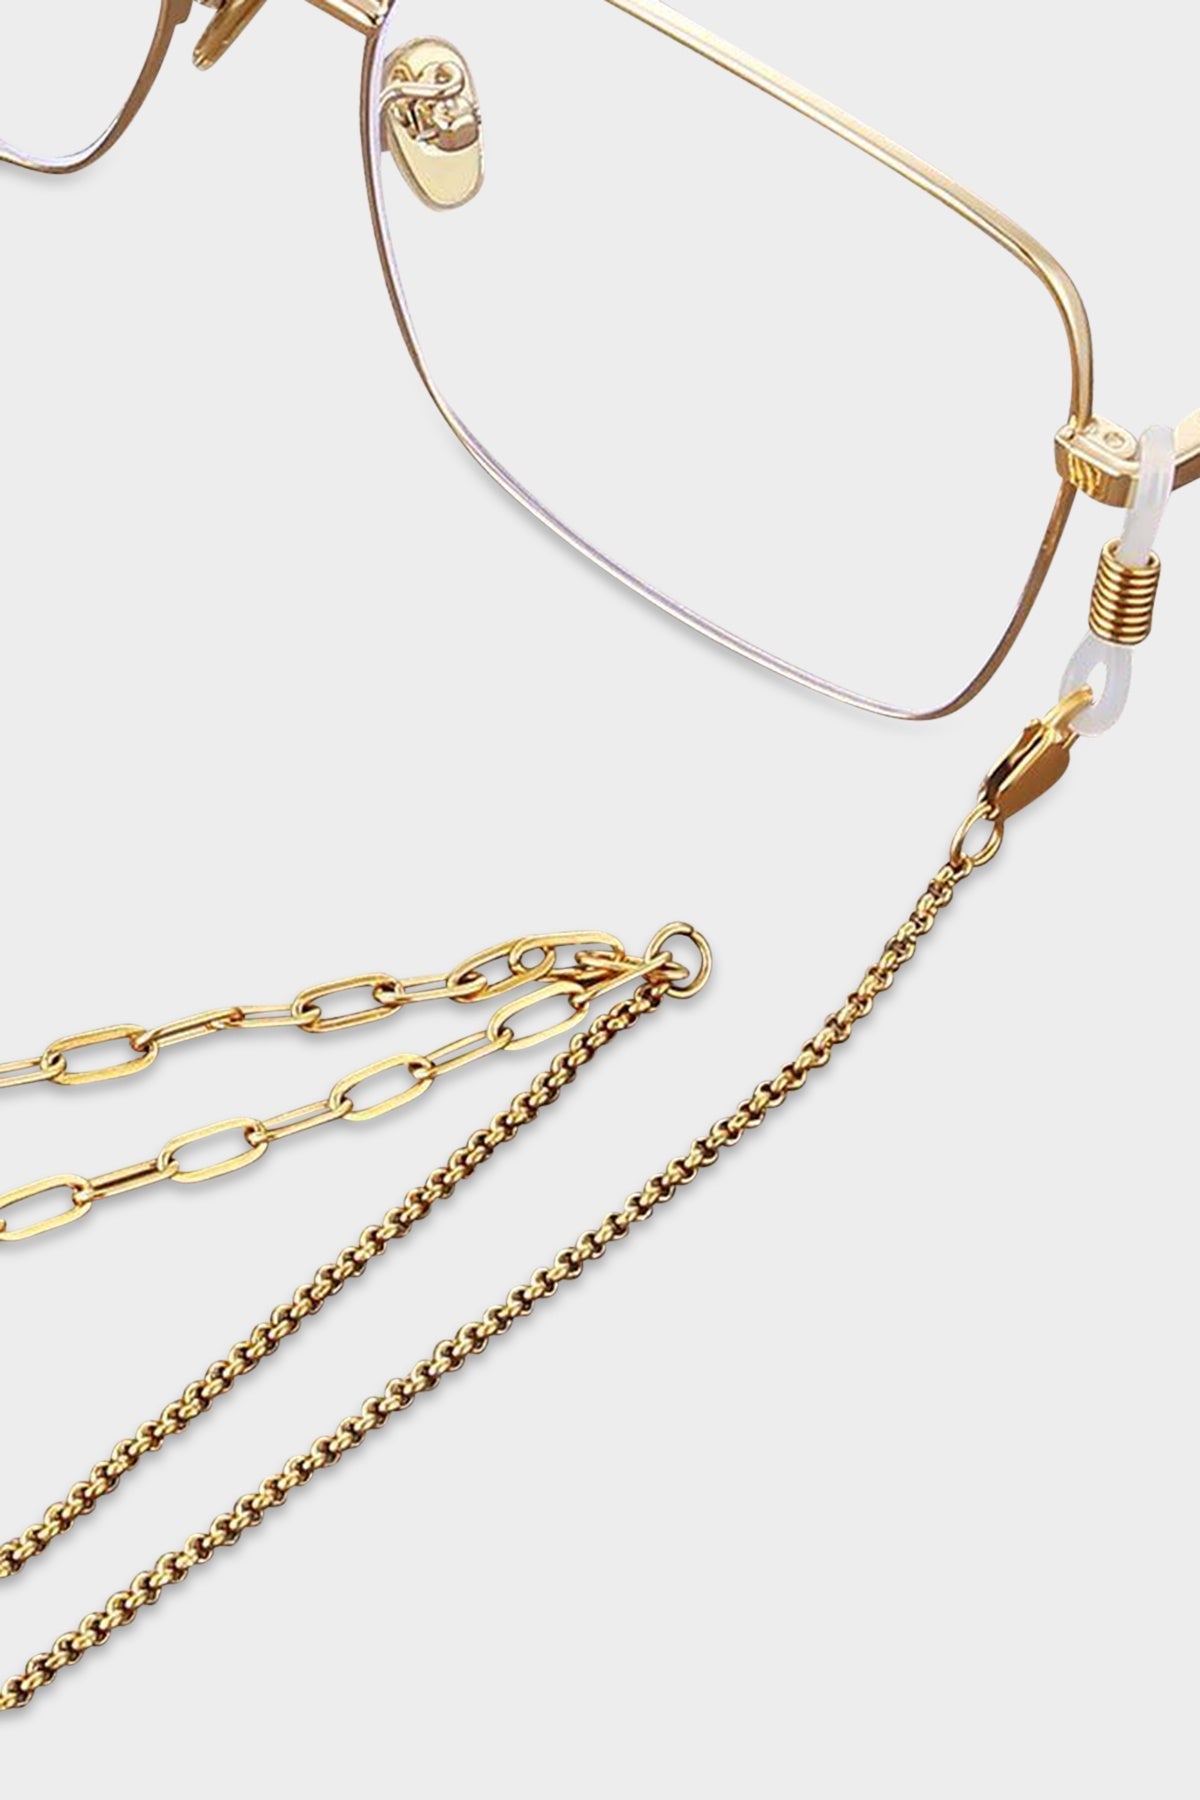 Staple 14K Gold Eyeglass Holder Necklace Chain